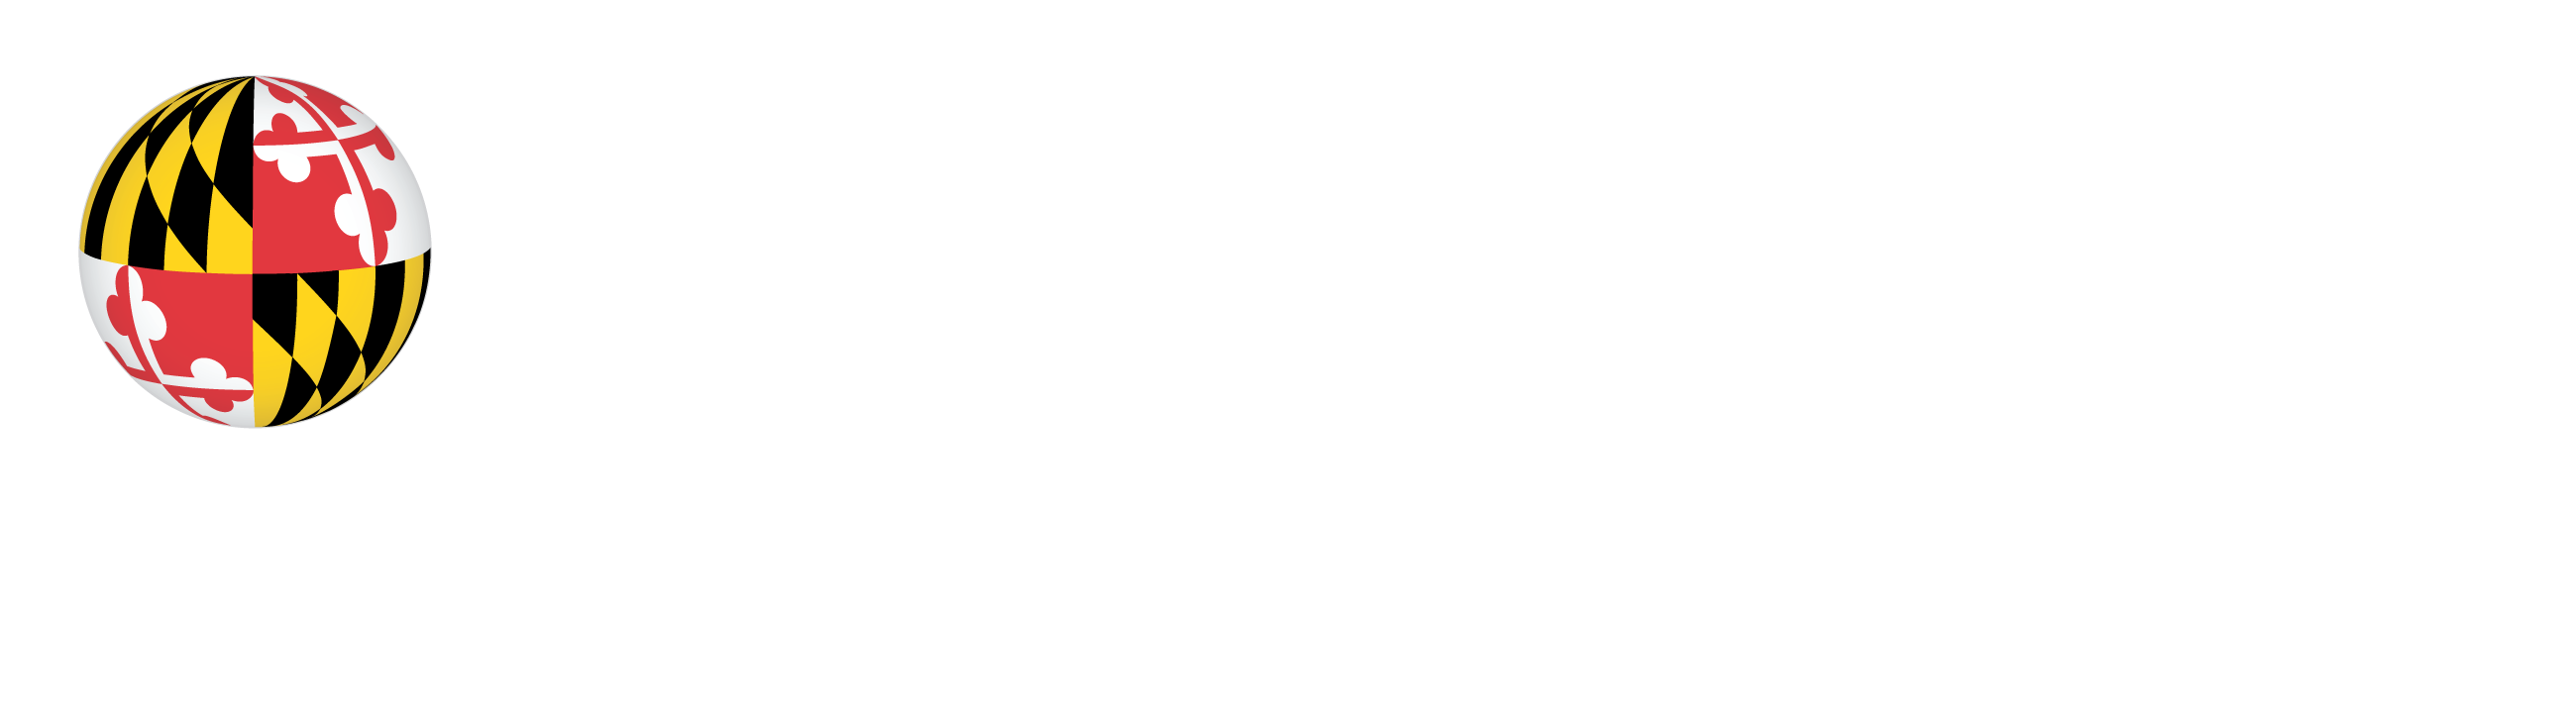 College of Information Studies